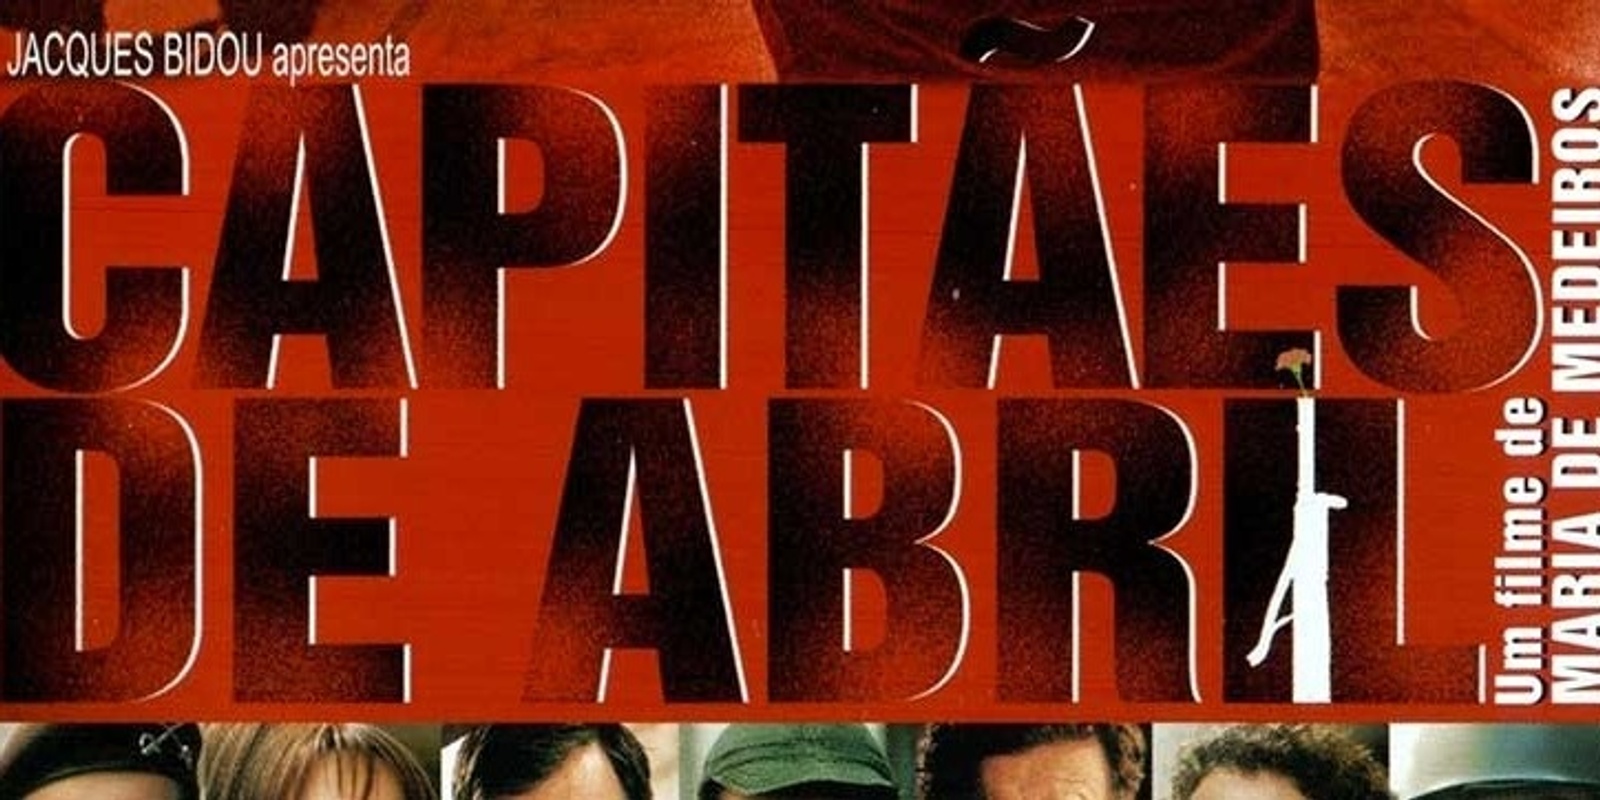 Banner image for Capitães de Abril - Ibero-American Film Showcase